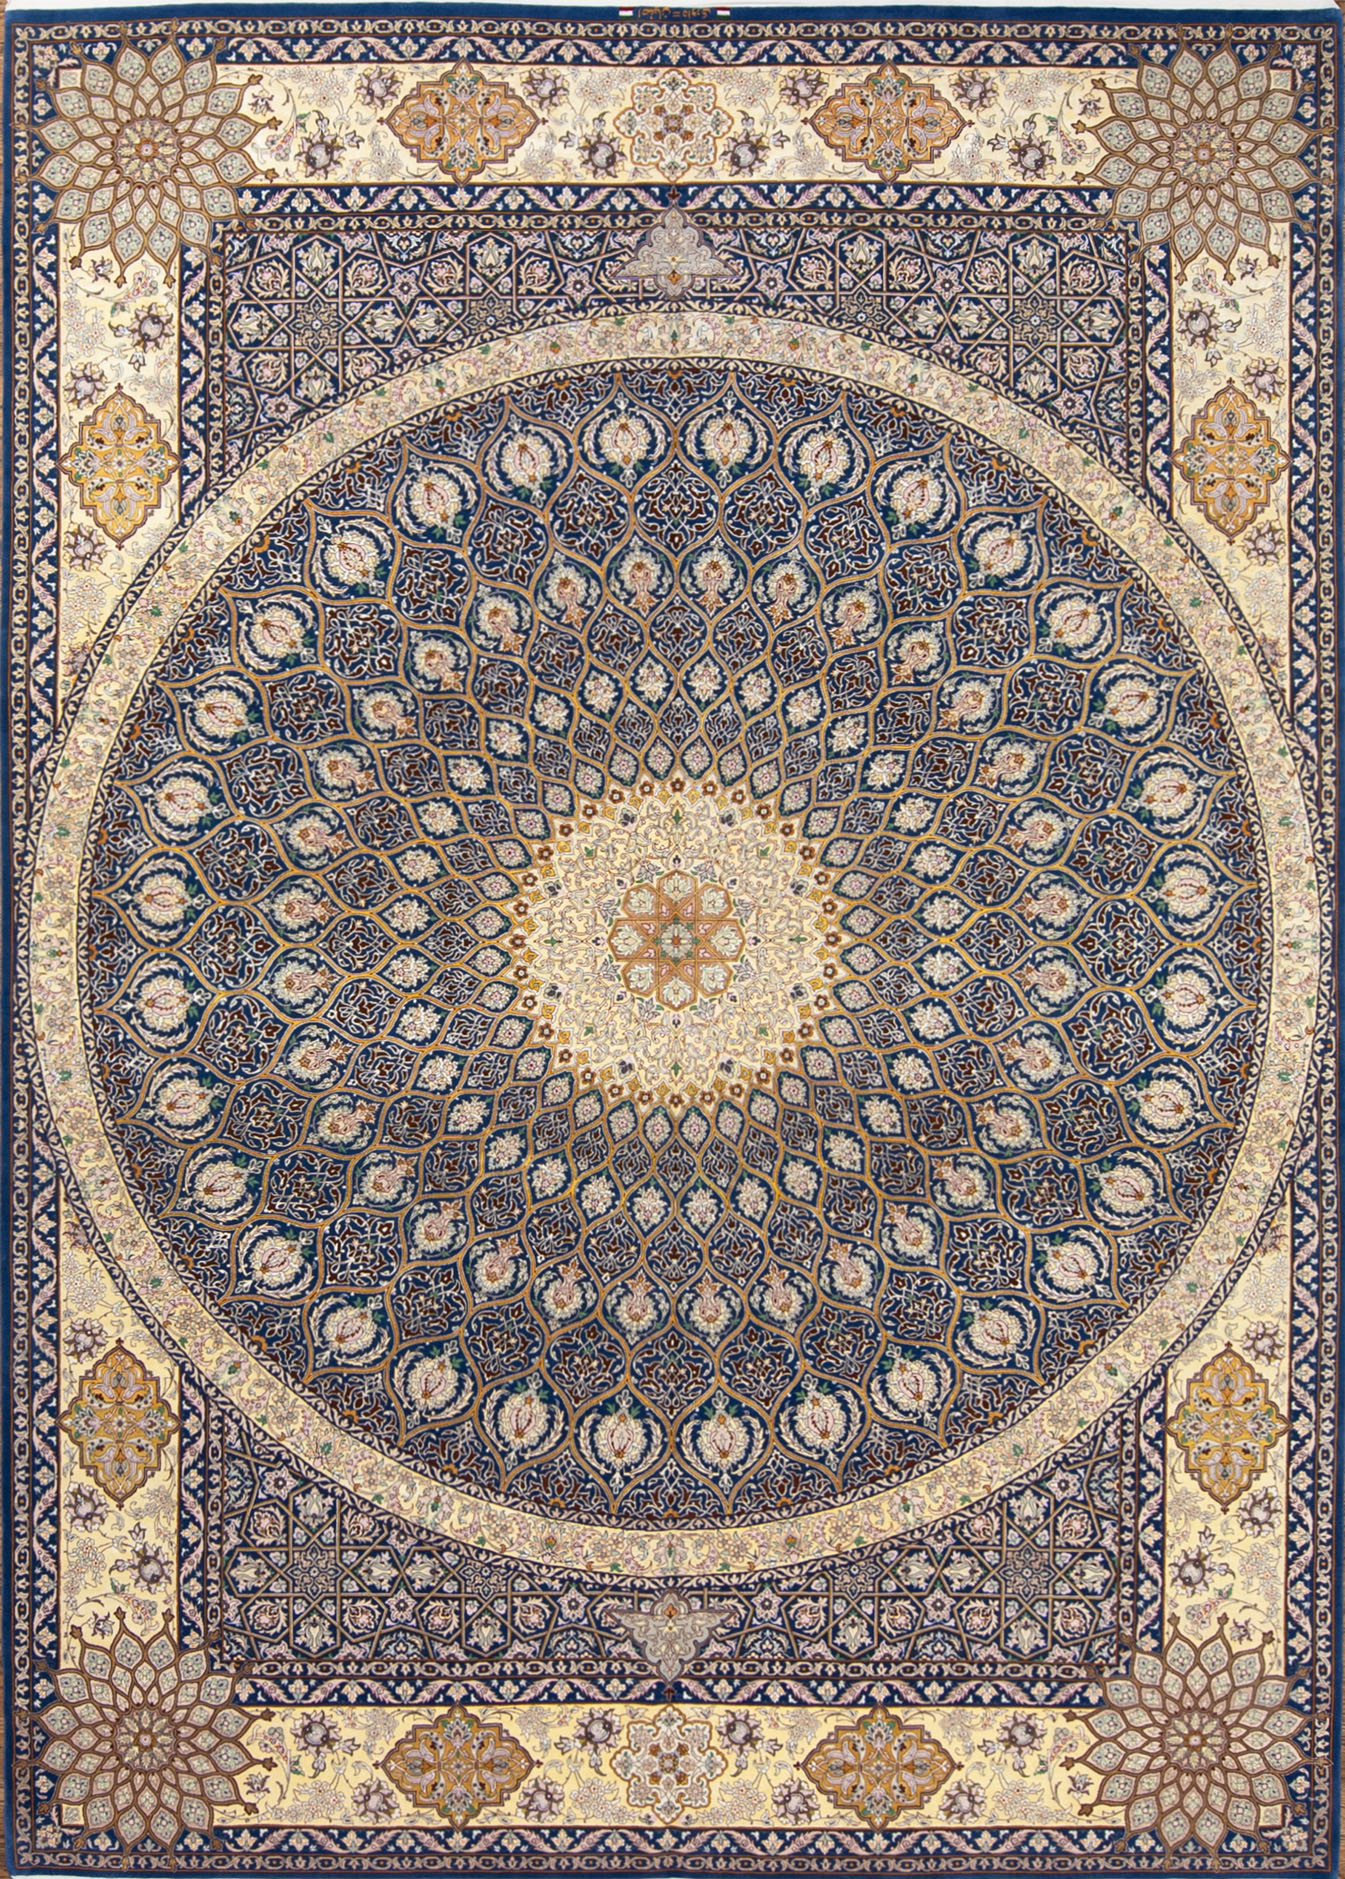 8x11 Persian rug. High quality handmade Persian Isfahan kork wool and silk rug, Mandala design in blue and gold colors.